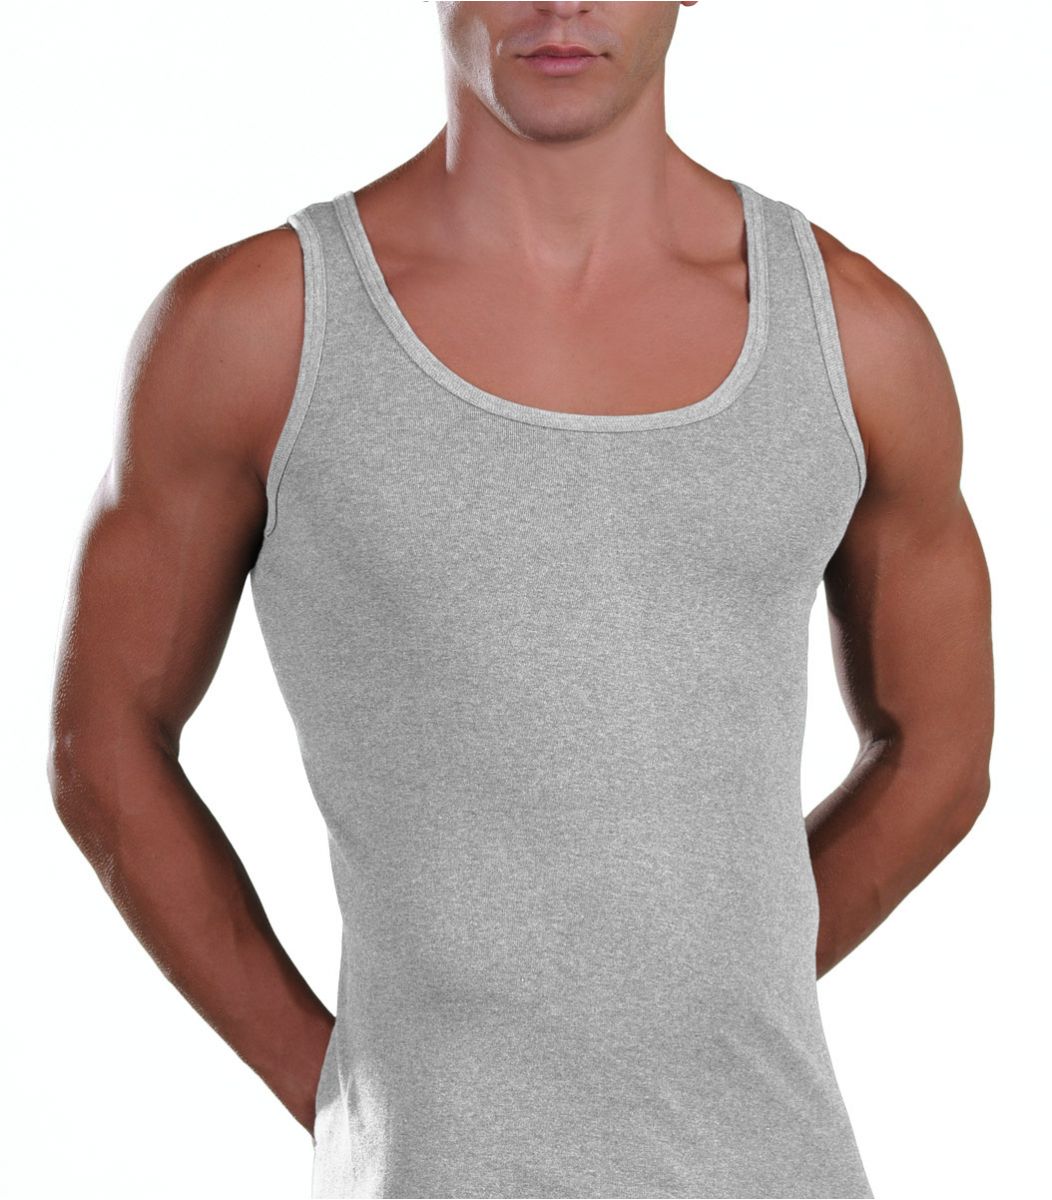  Muscle Top T-Shirt Lord Sleeveless Shirt, cotton 115-17